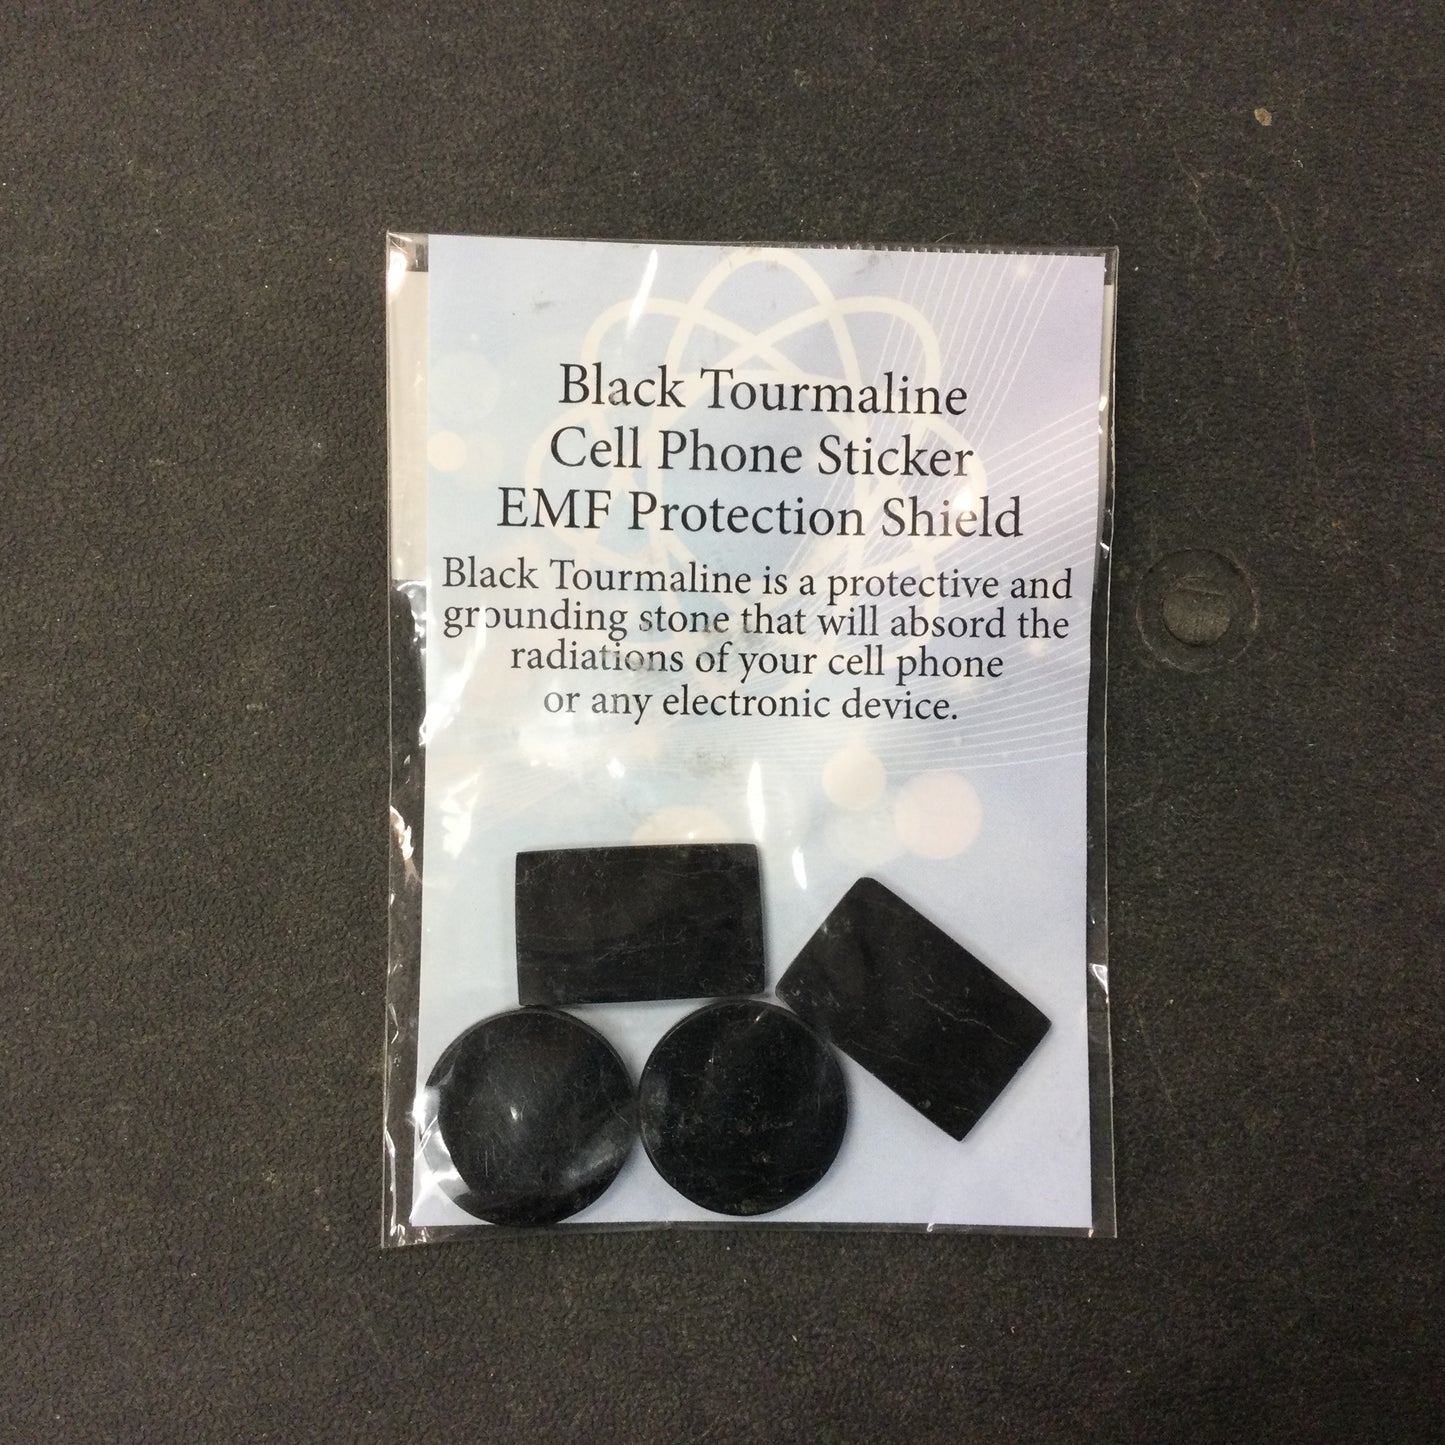 Black tourmaline cell phone sticker EMF protection shield